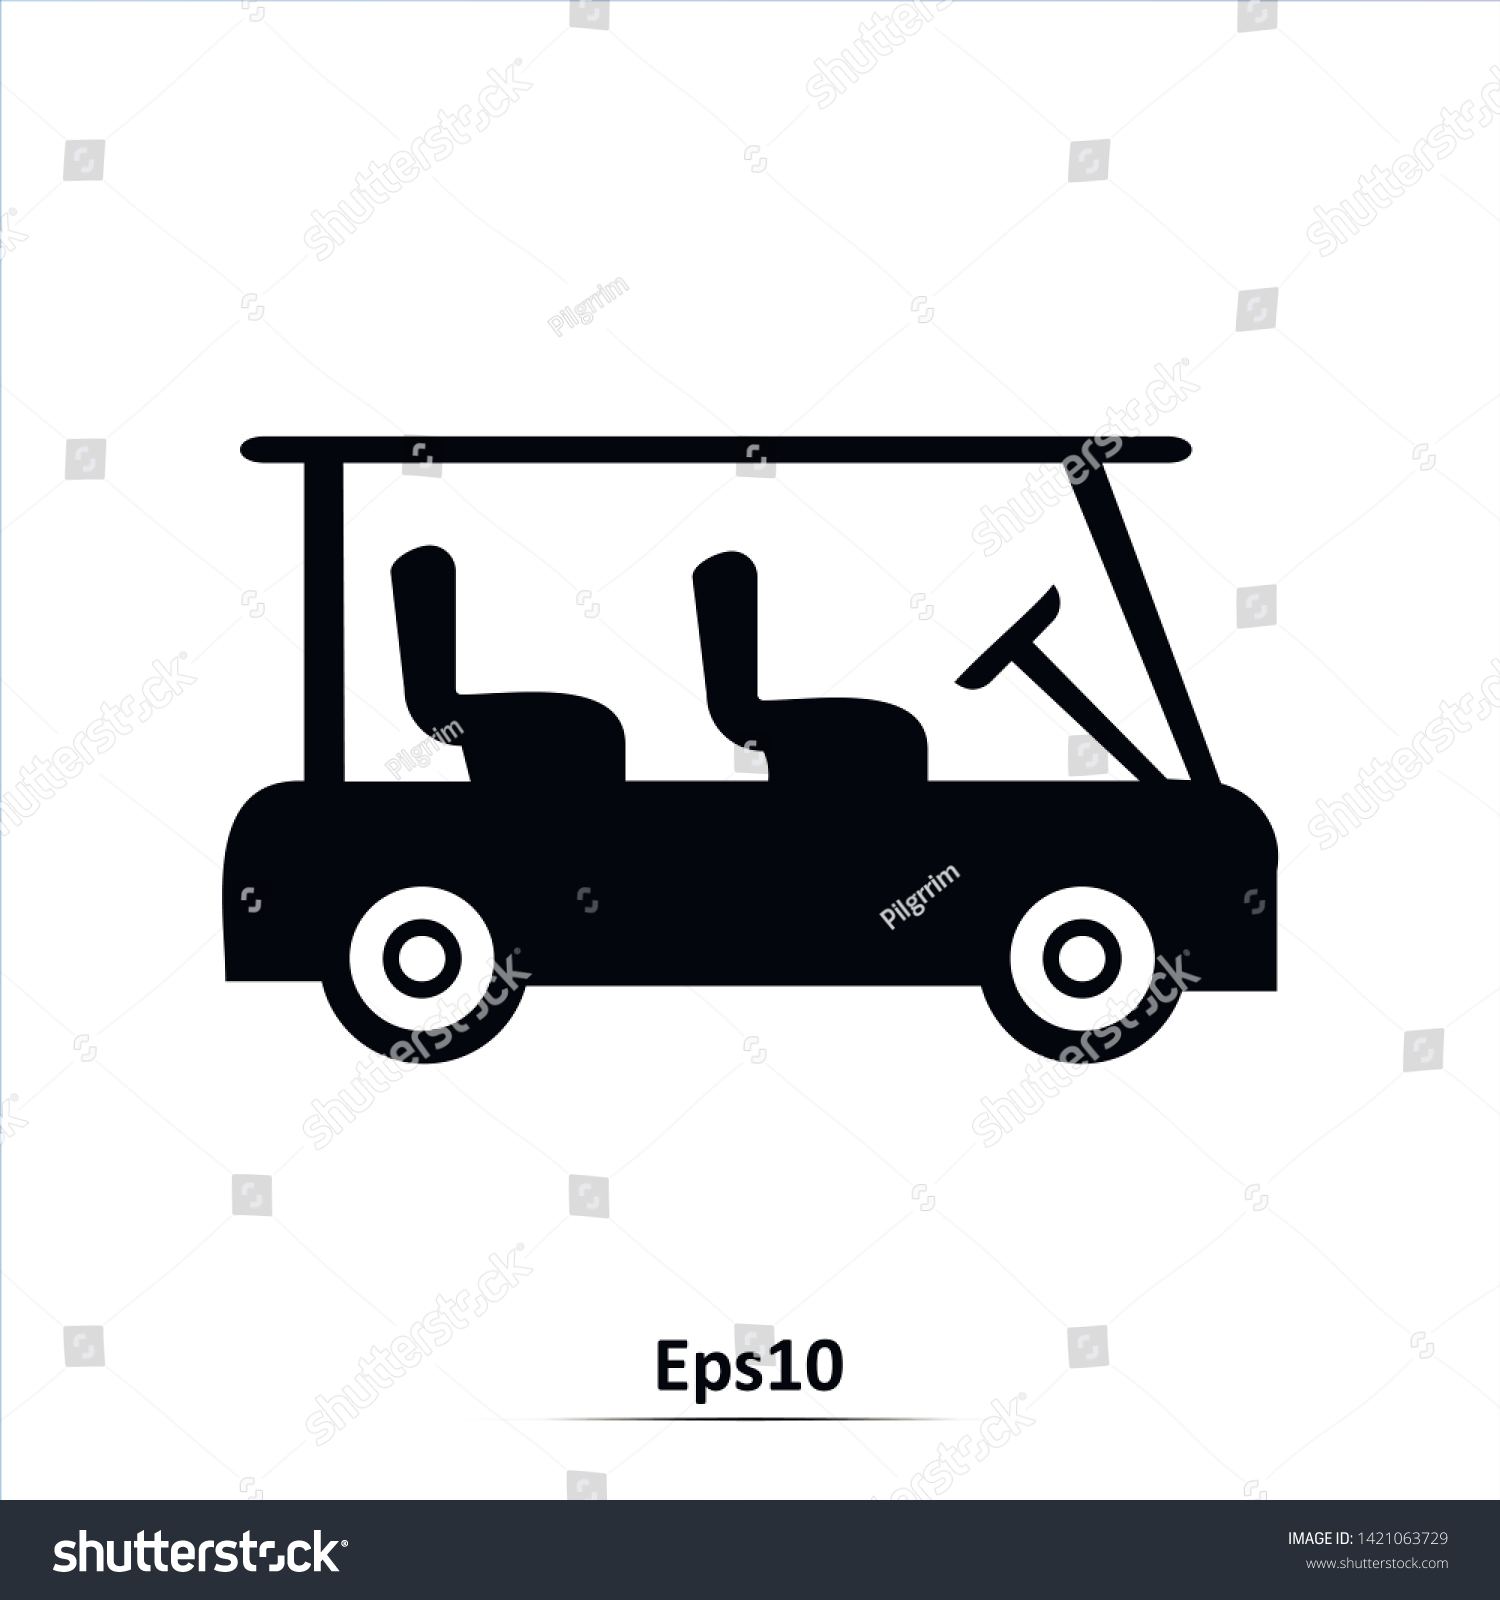 pilgrim golf buggy